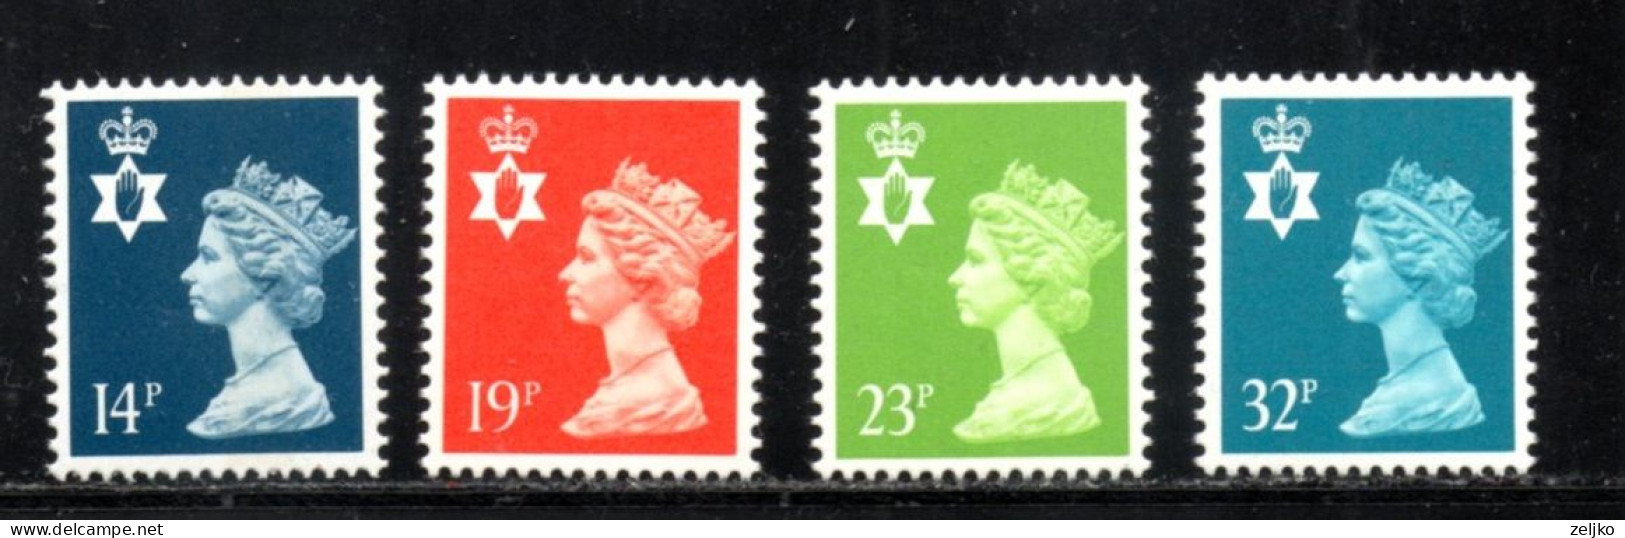 UK, GB, Great Britain, Regional Issue, North Ireland, MNH, 1988, Michel 47 - 50, Queen Elizabeth - Irlanda Del Norte